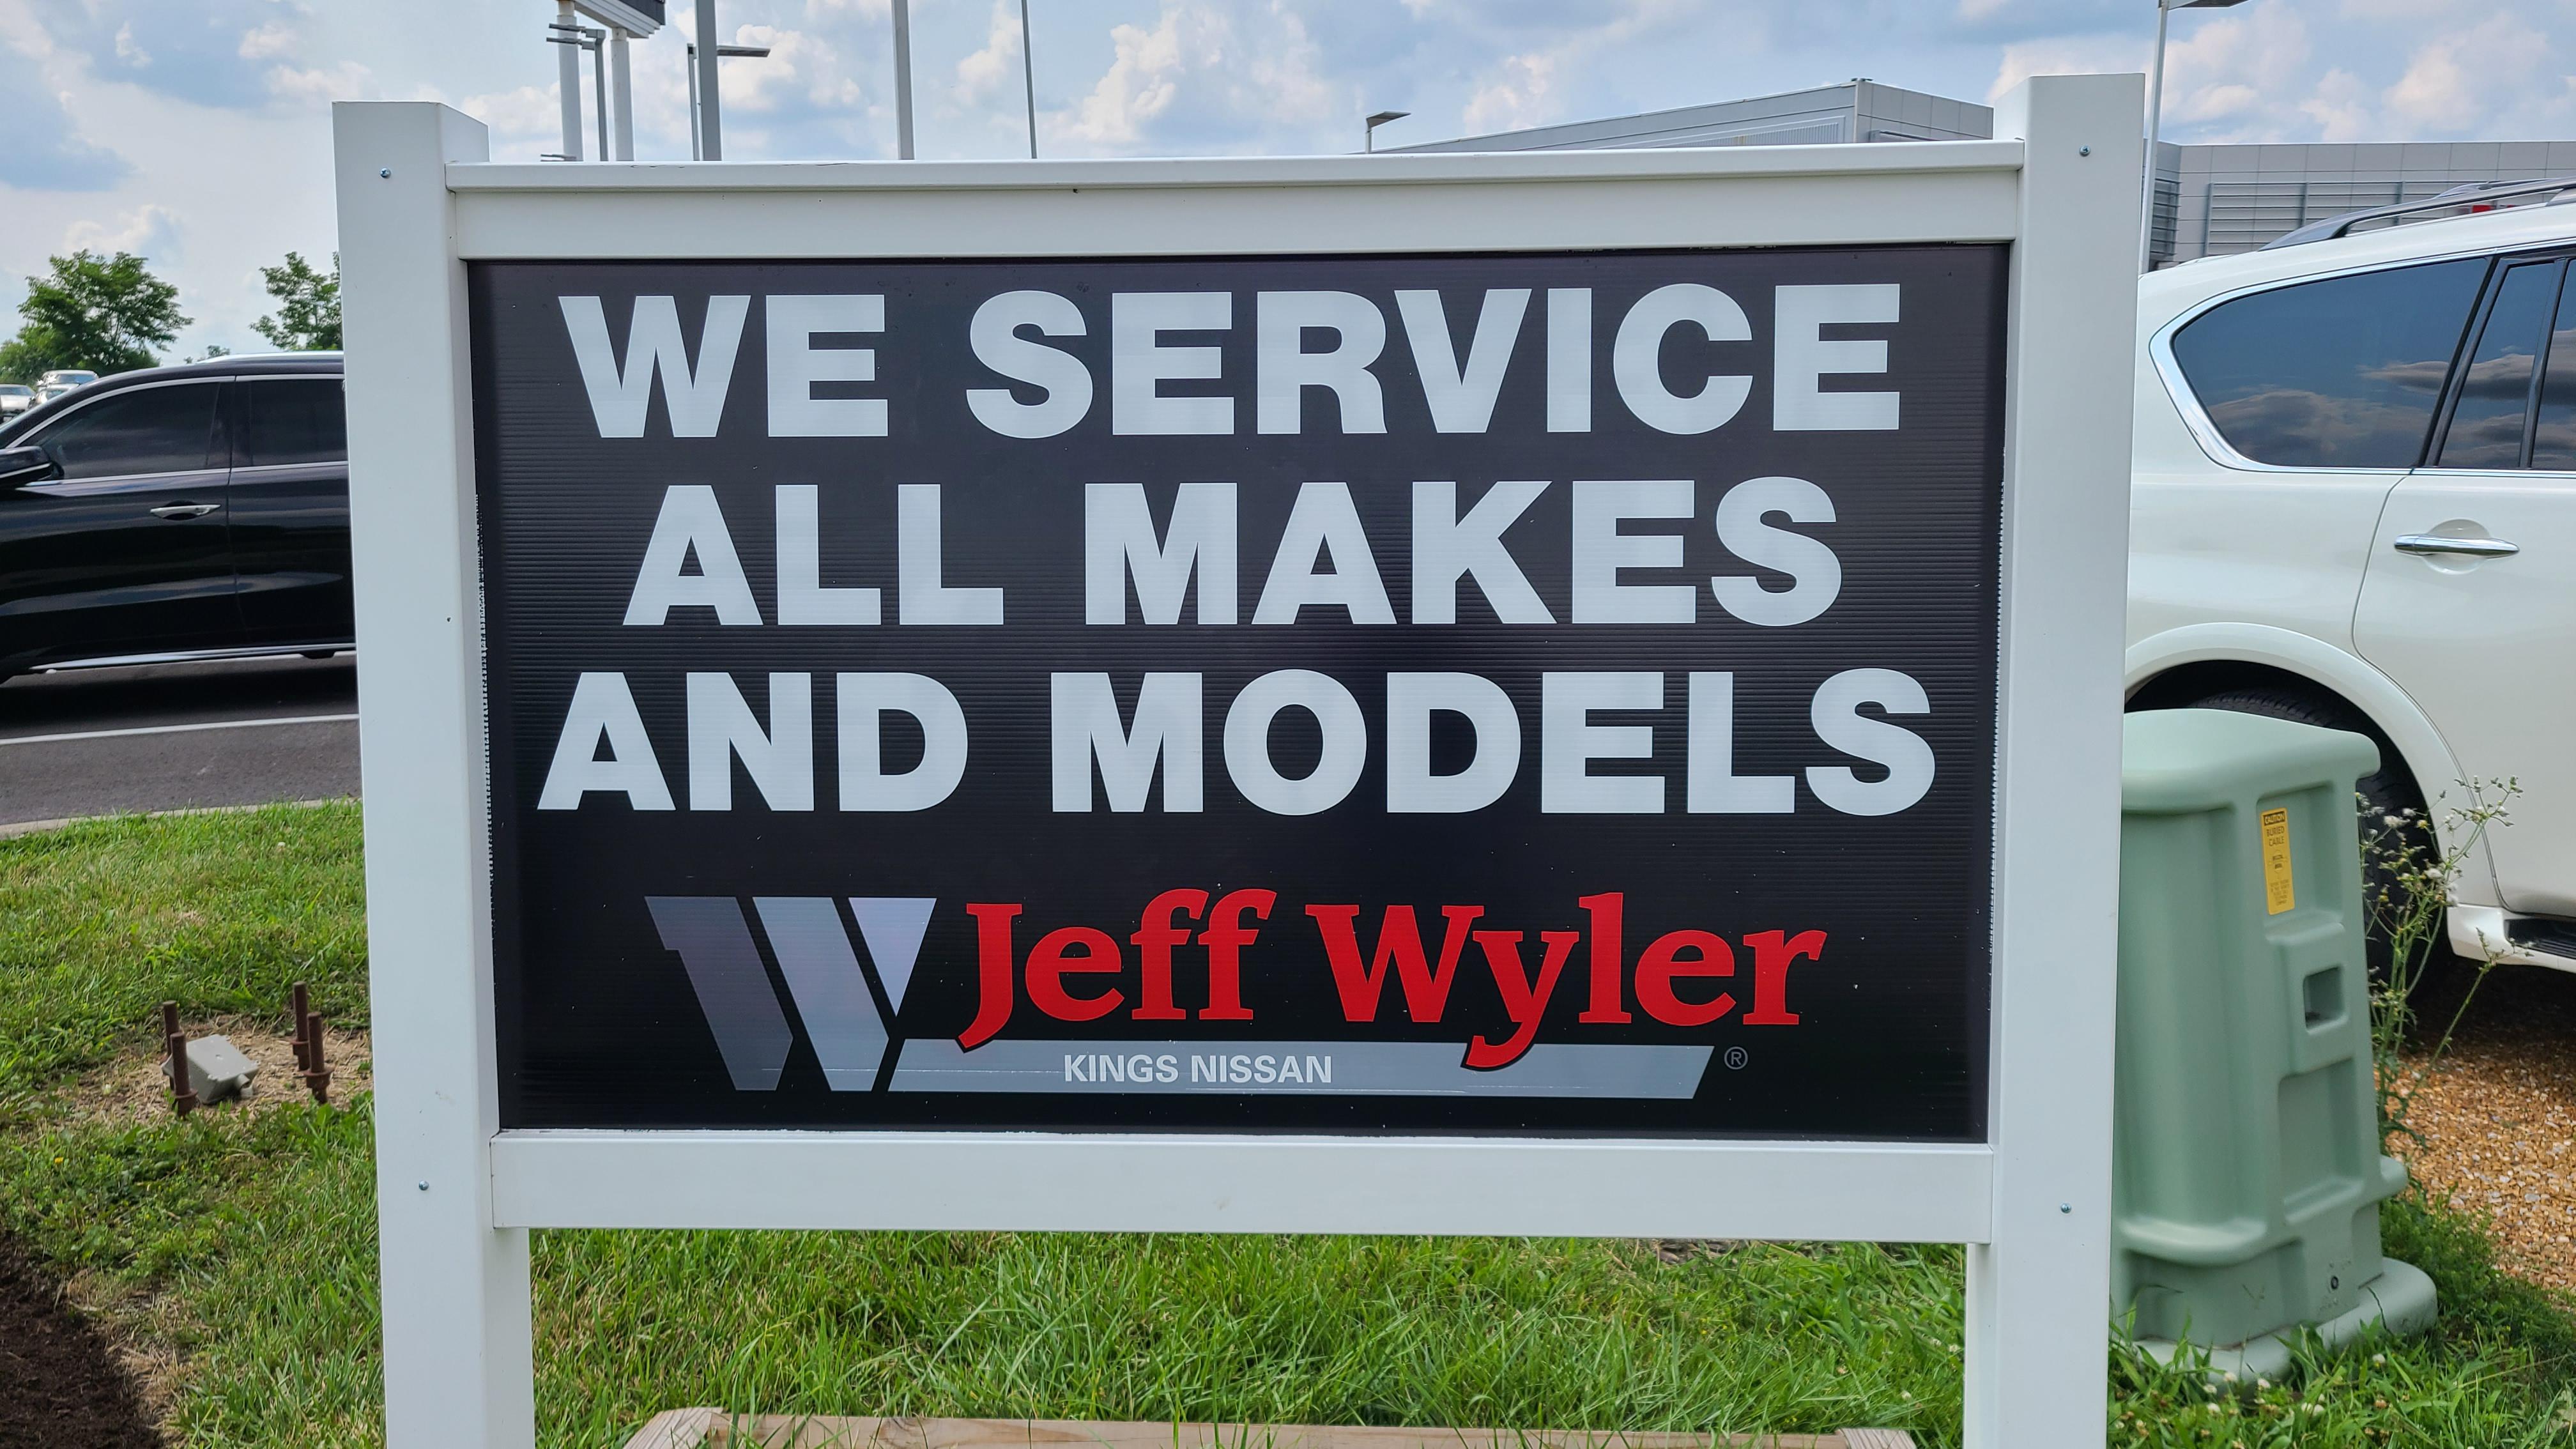 Jeff Wyler Kings Nissan - 513-697-9770
New Nissan Car Sales Jeff Wyler Kings Nissan Cincinnati (513)697-9770